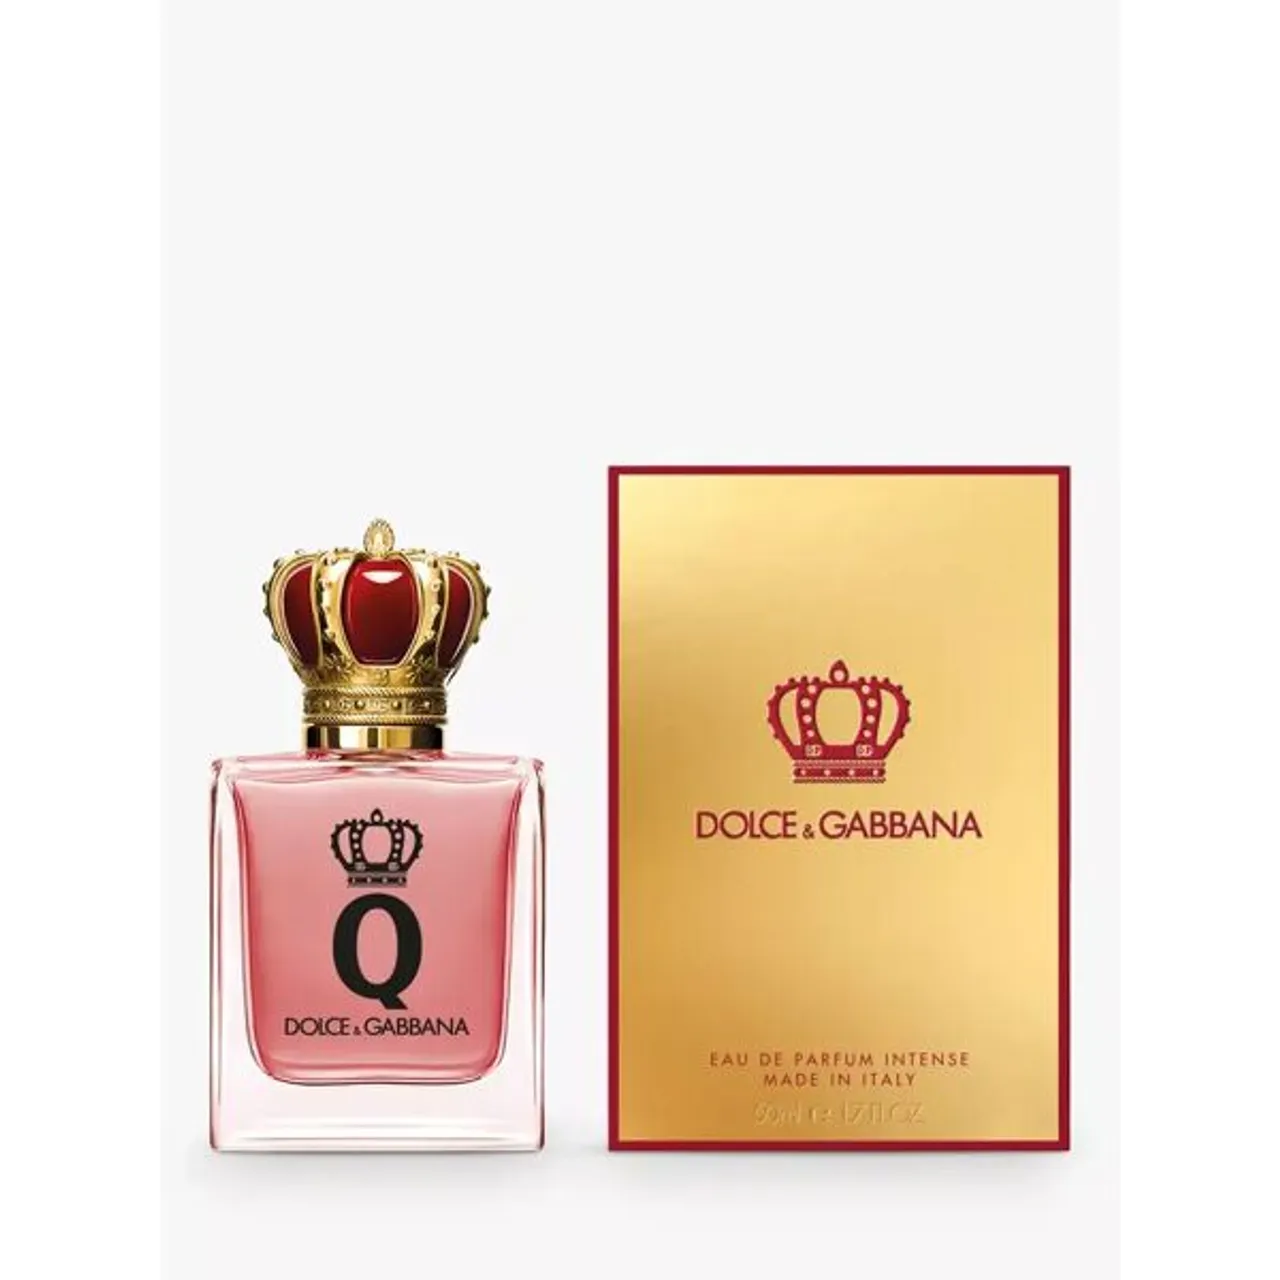 Q by Dolce & Gabbana Intense Eau de Parfum - Female - Size: 50ml